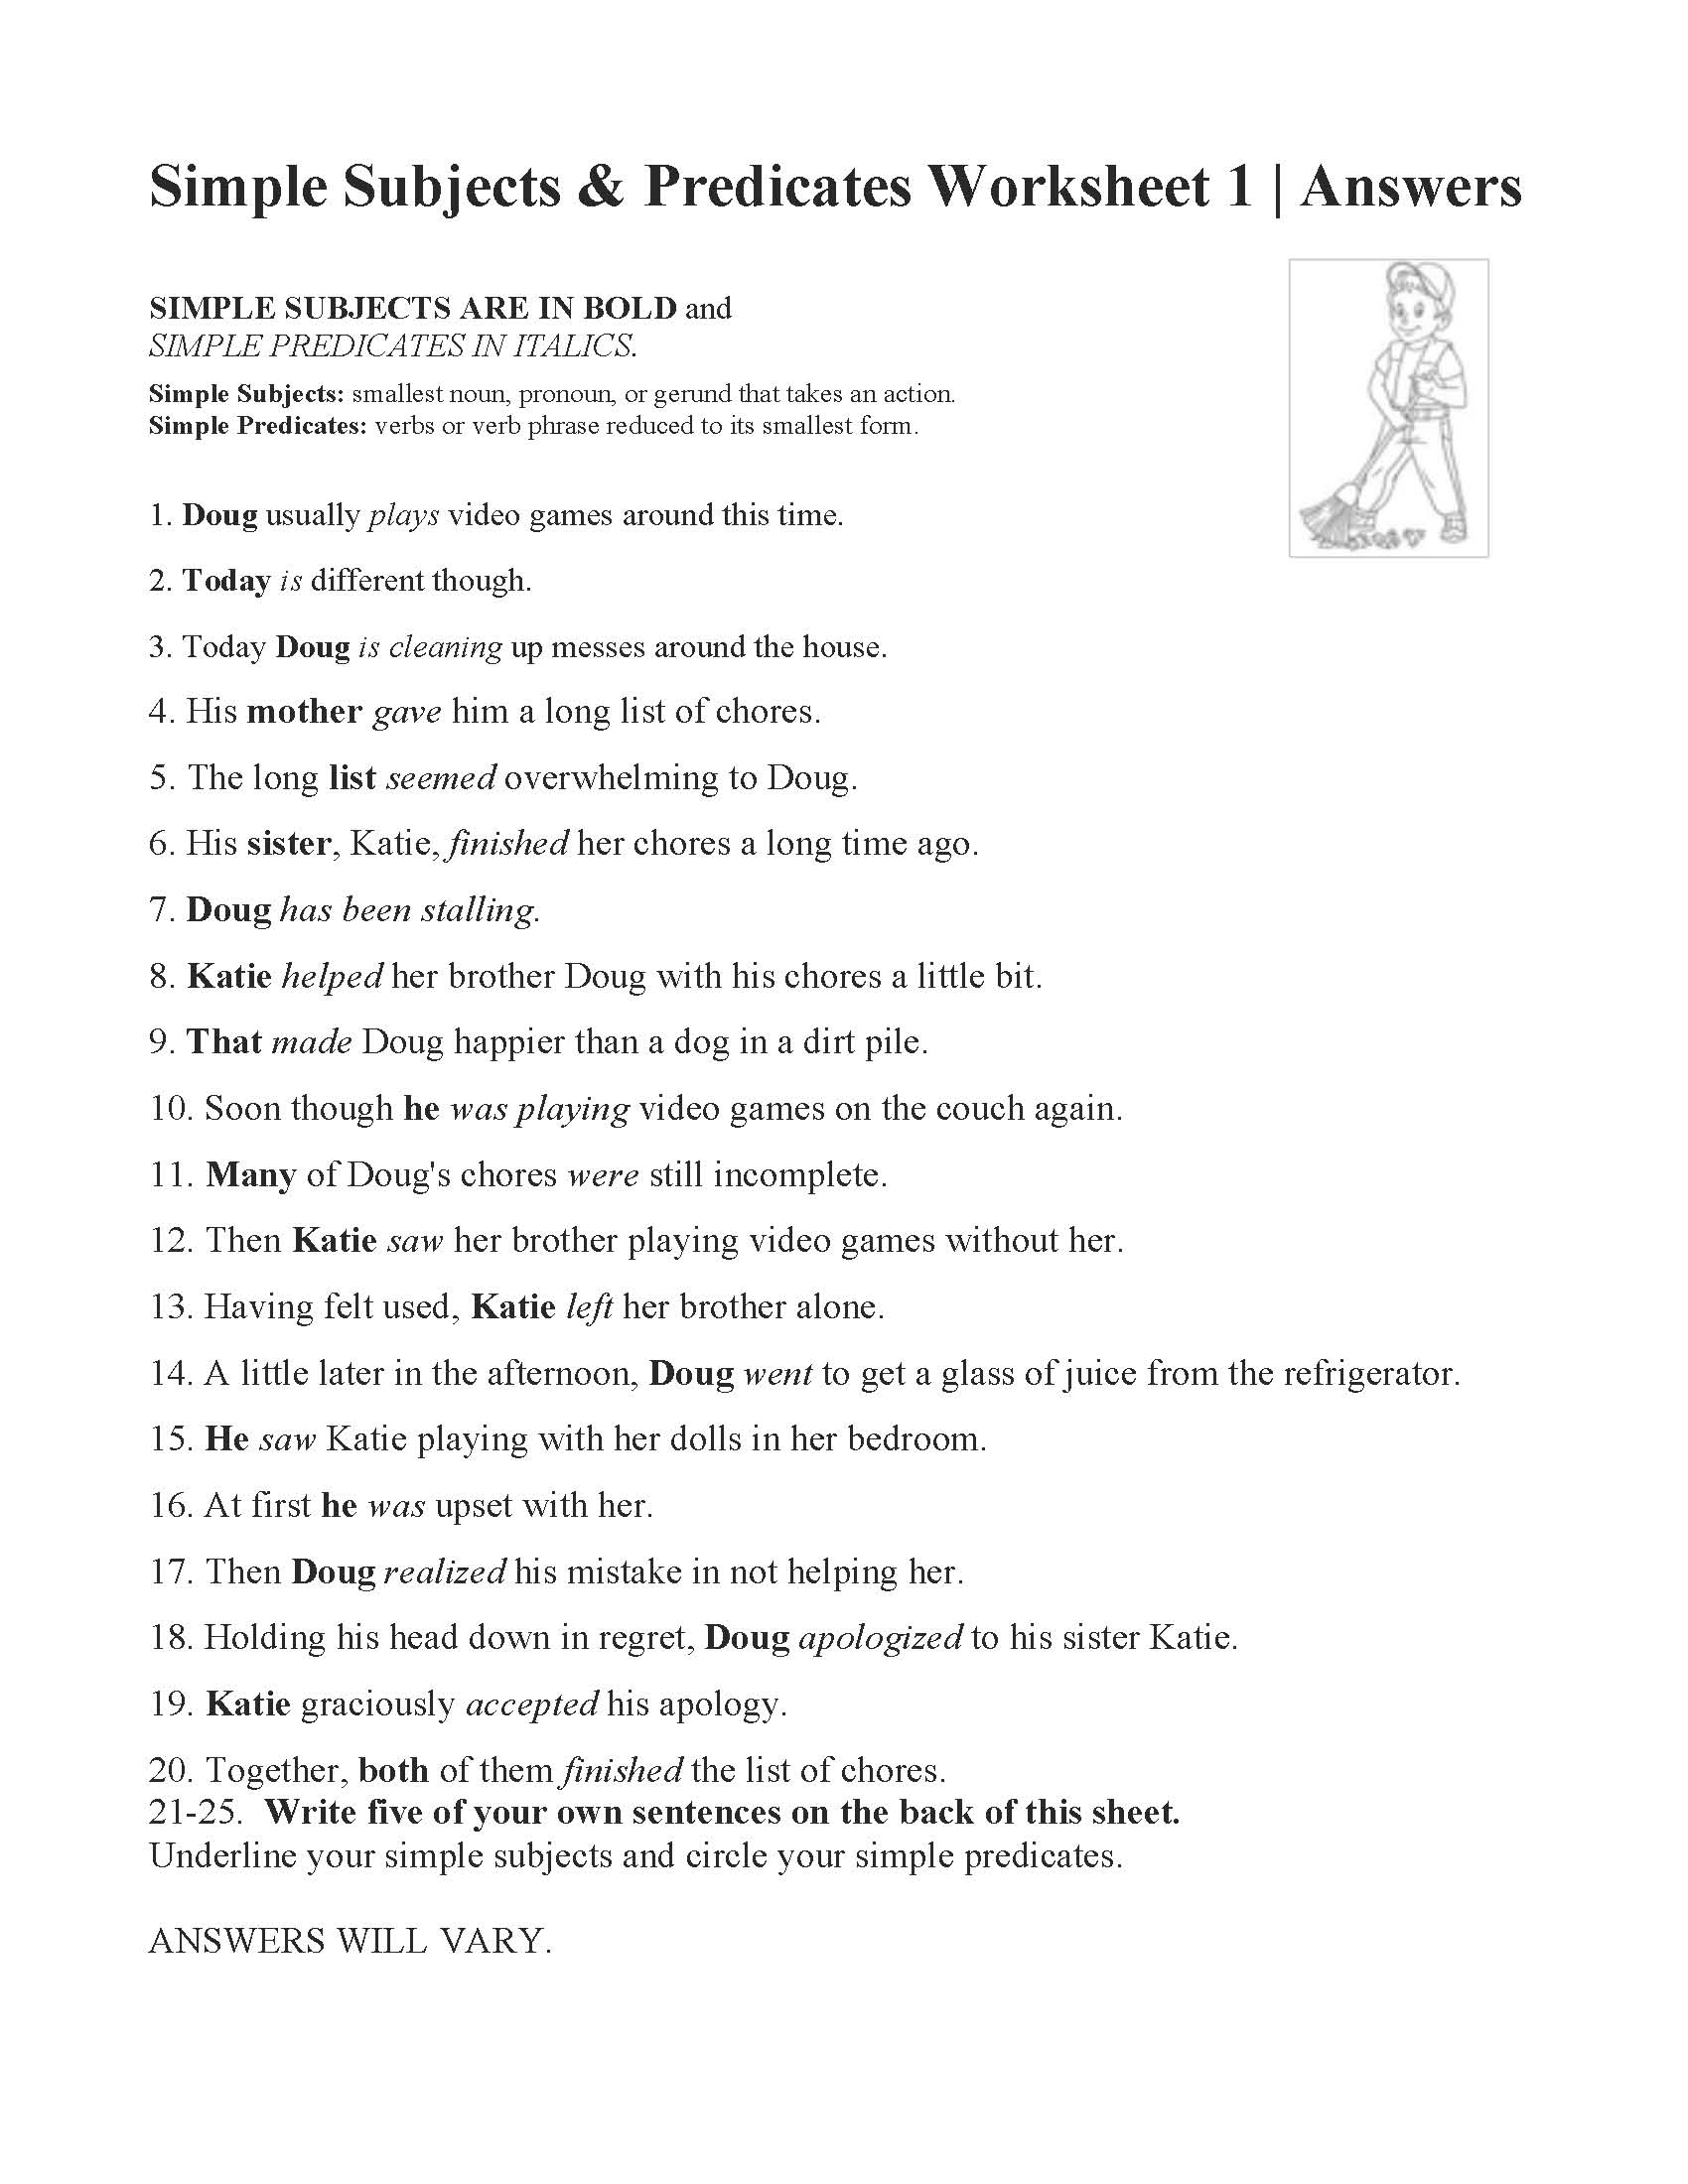 Simple Subject Worksheets Worksheets For Kindergarten